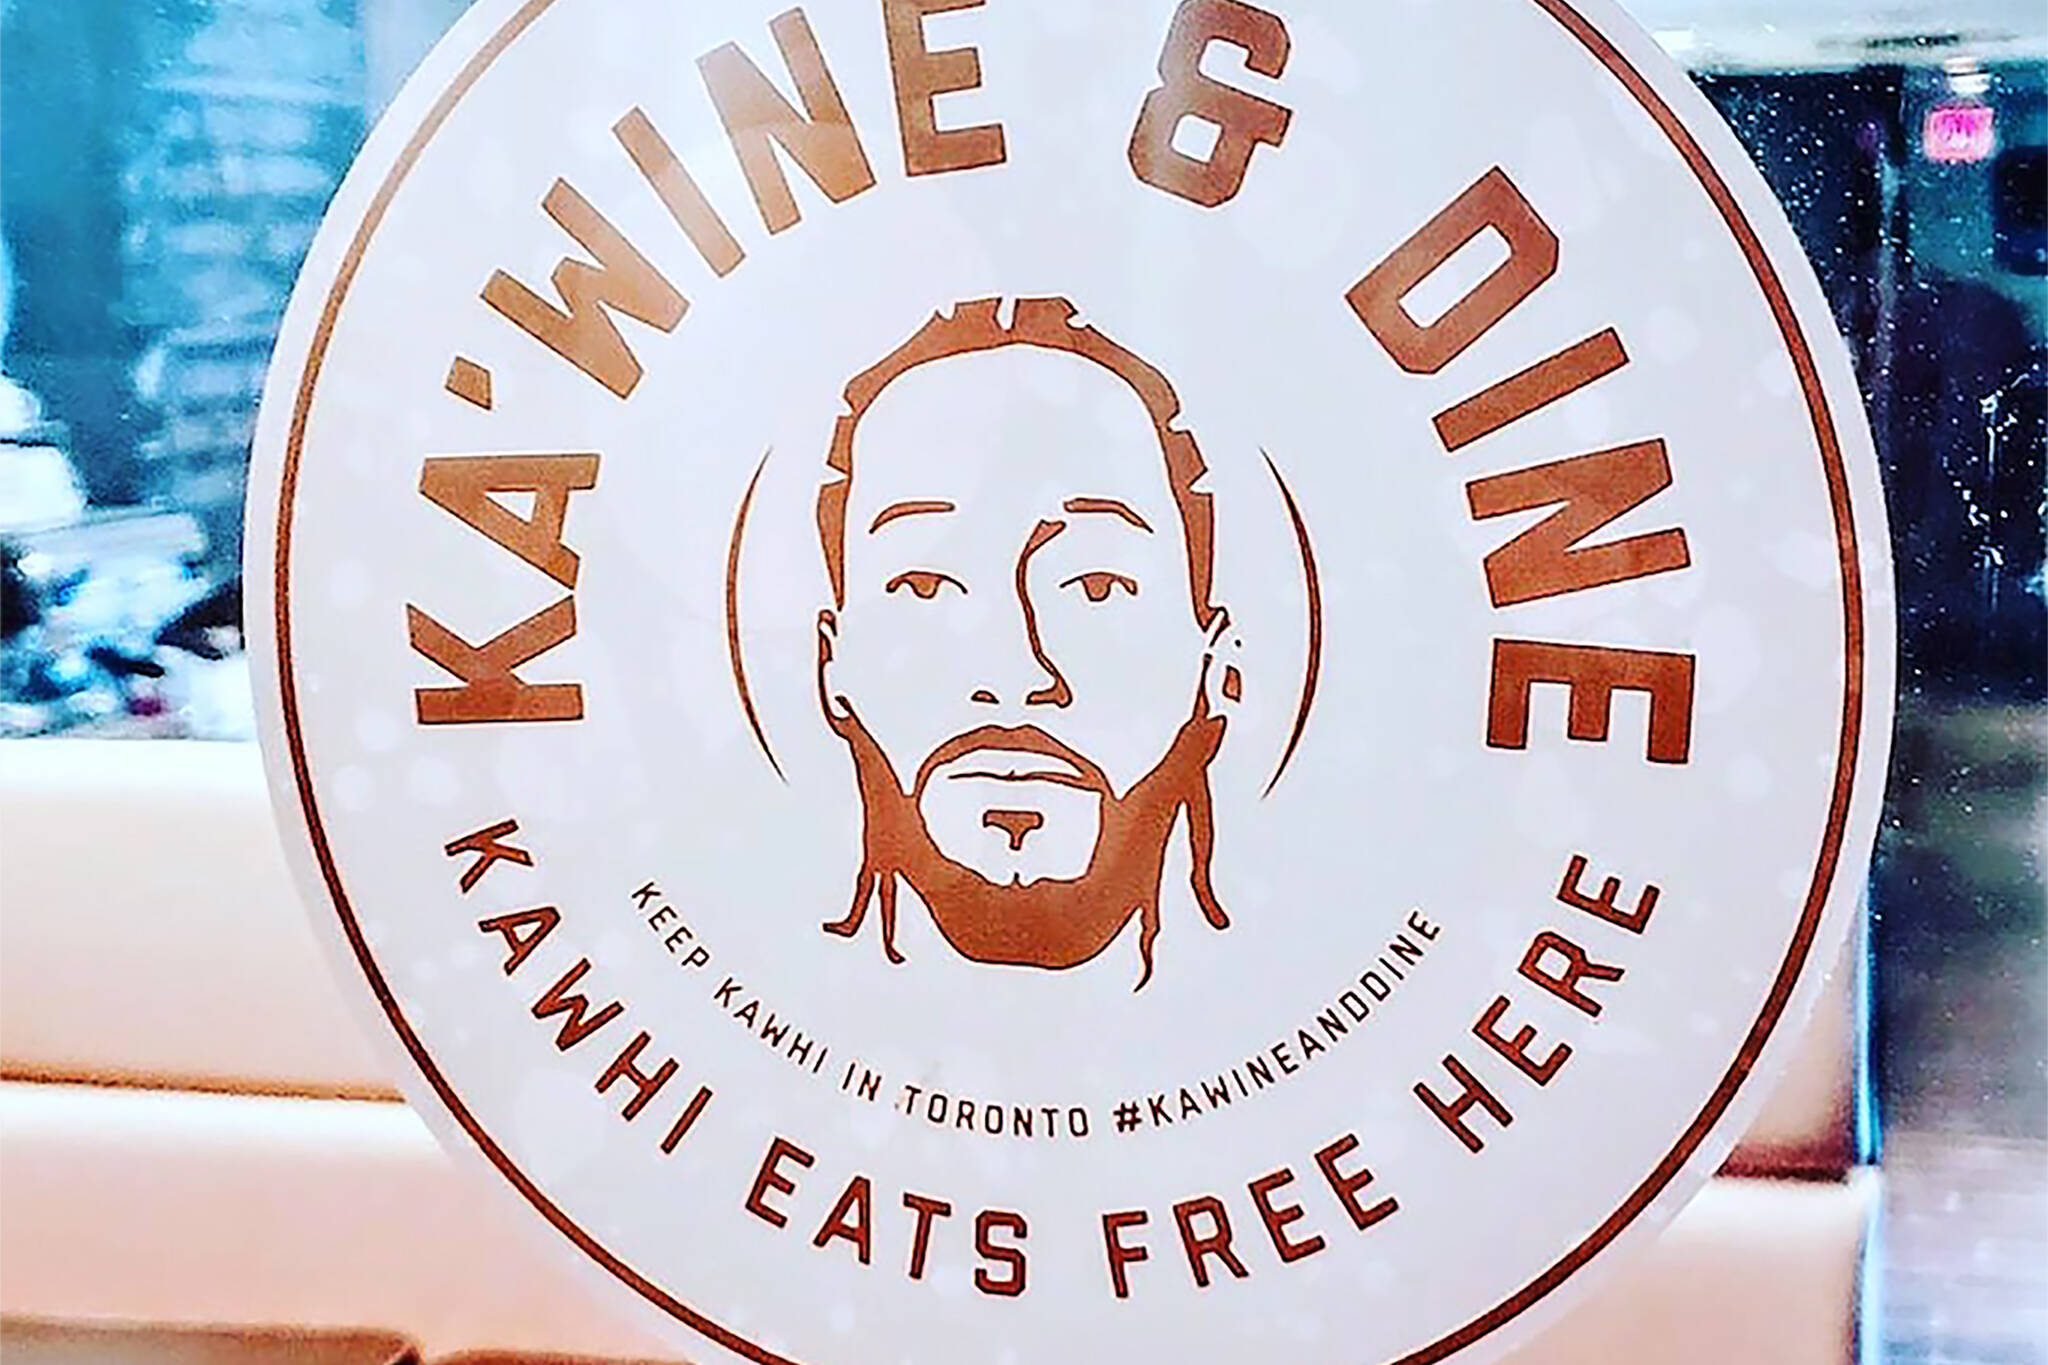 kawine and dine